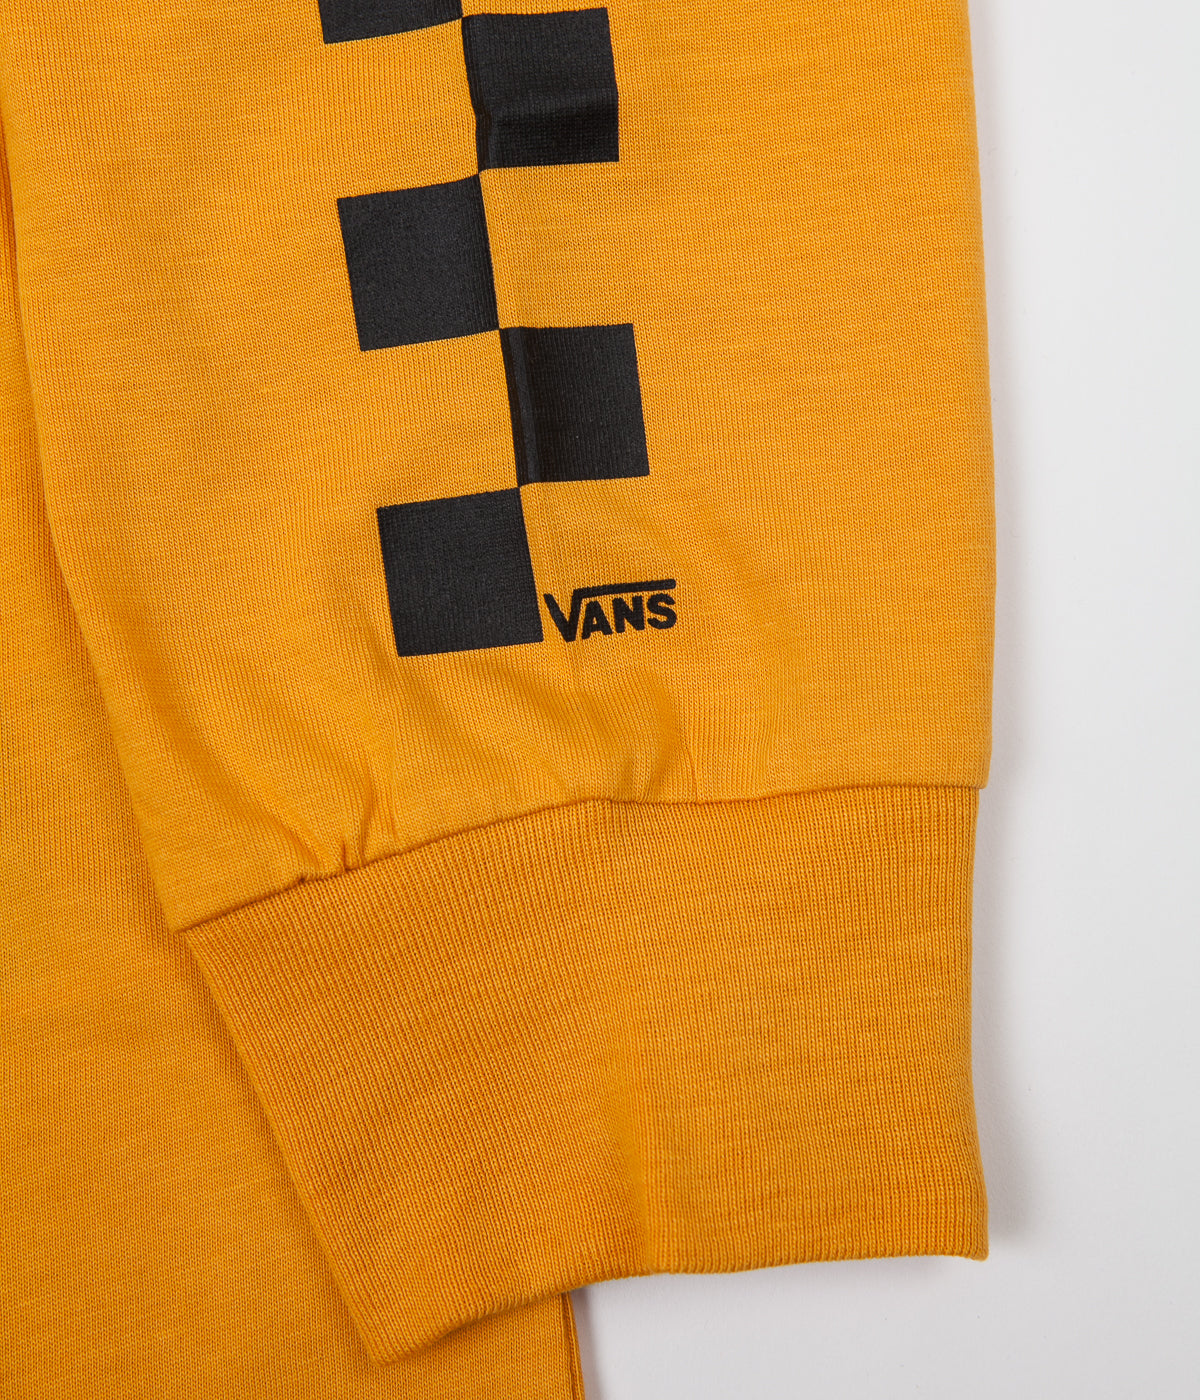 yellow checkerboard vans shirt